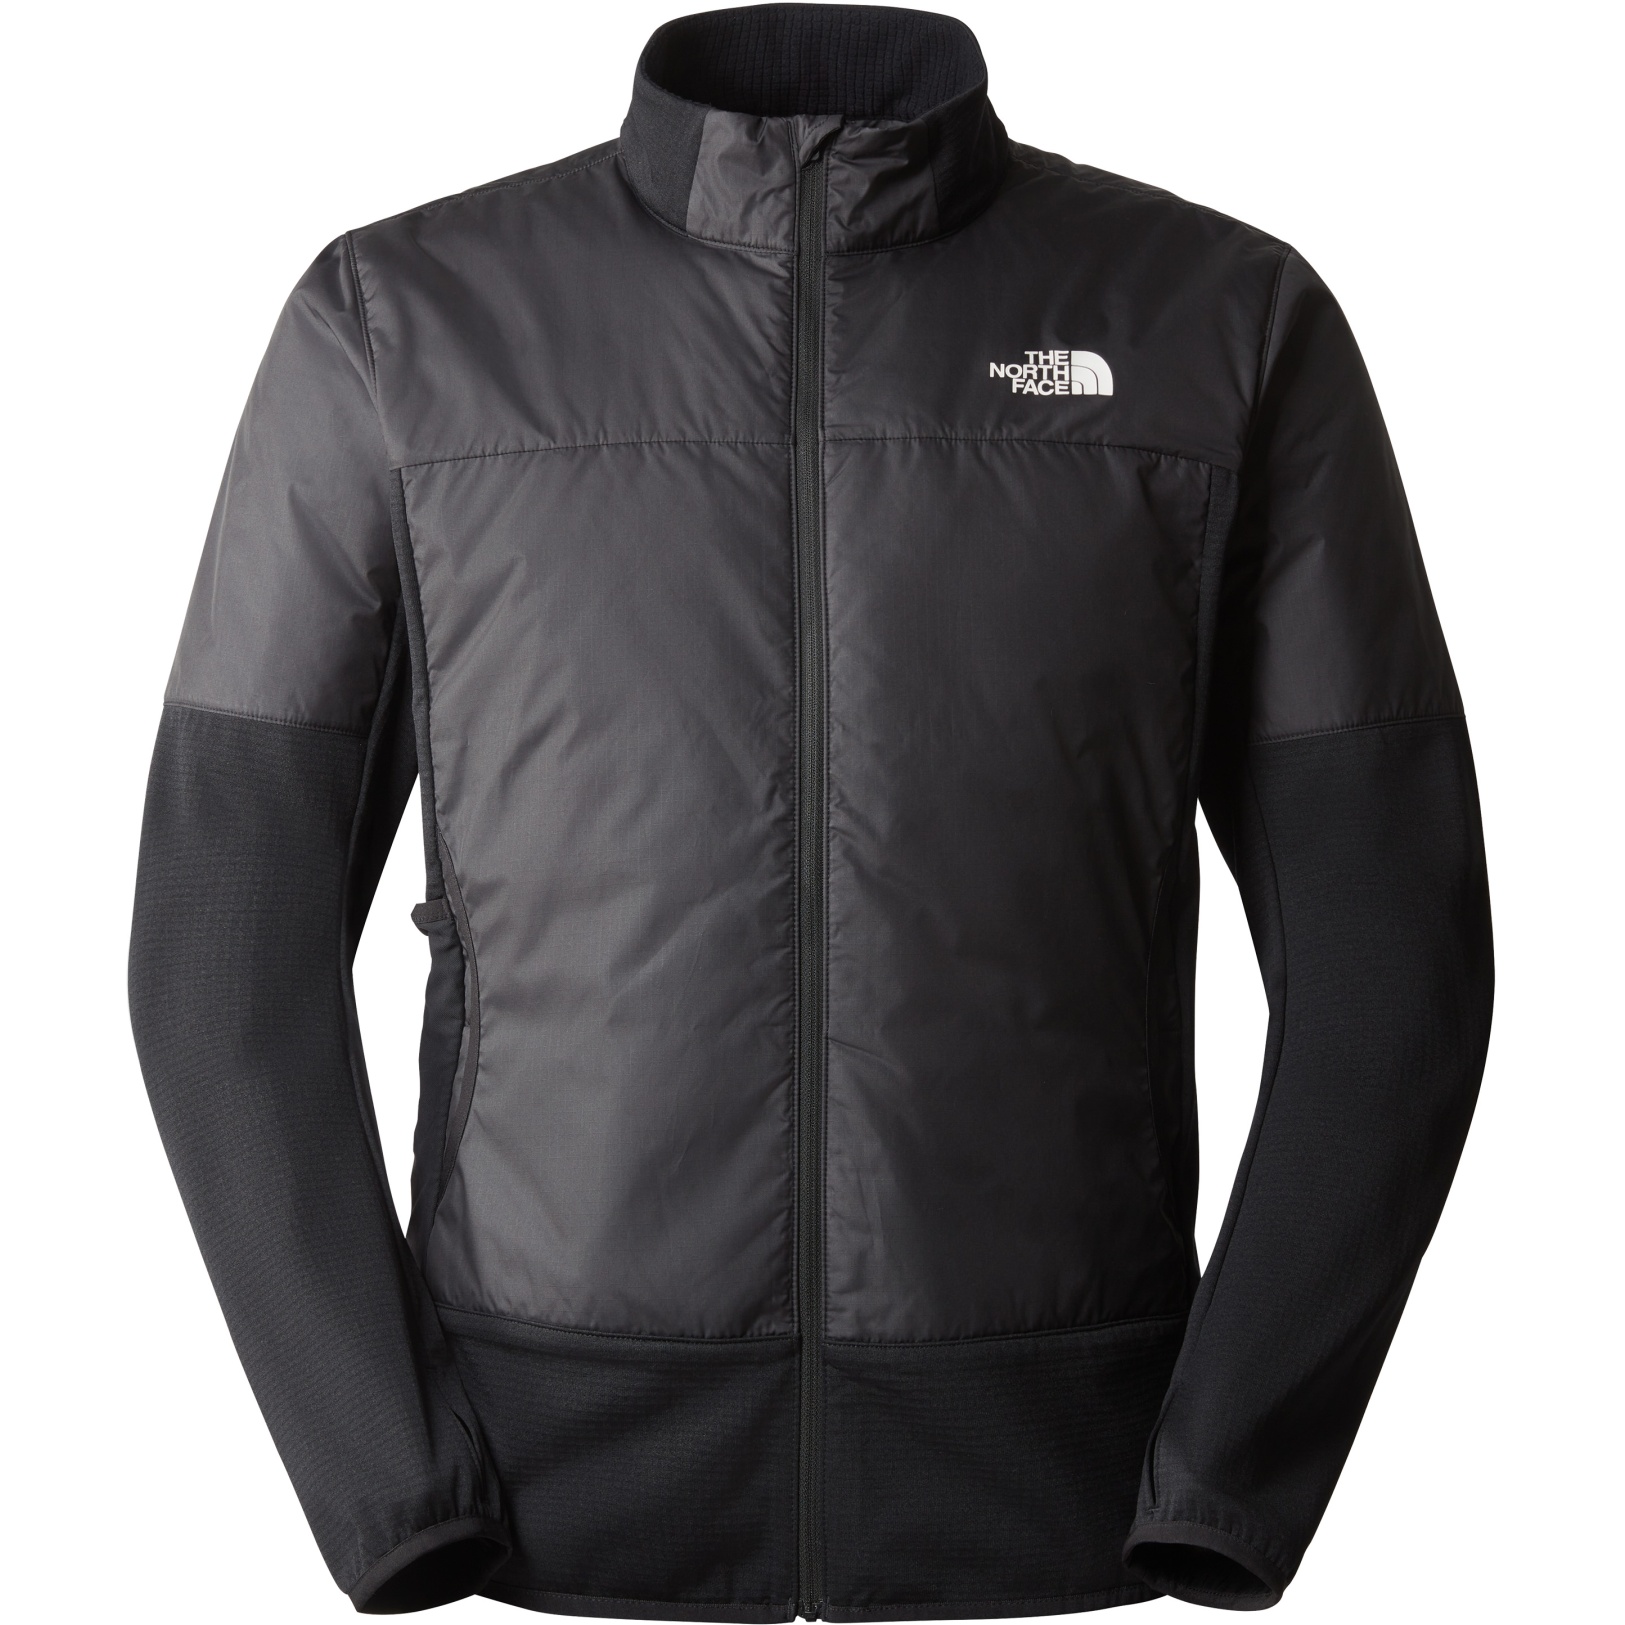 The North Face Winter Warm Pro Jacket Men - TNF Black